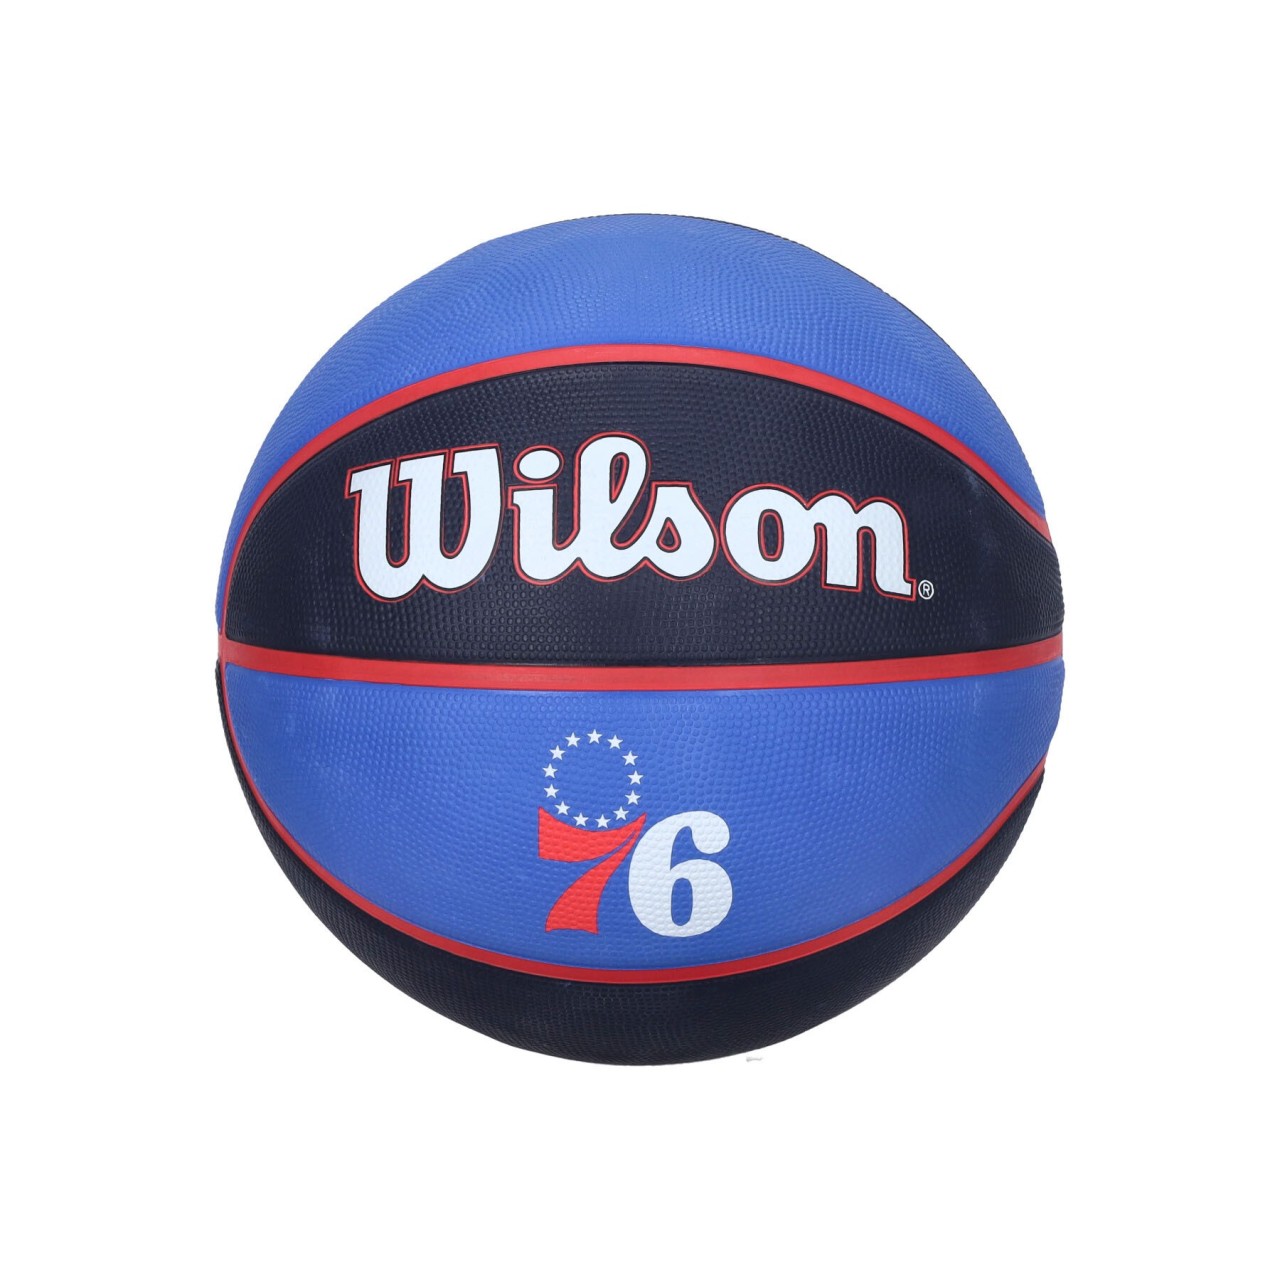 WILSON TEAM NBA TEAM TRIBUTE BASKETBALL SIZE 7 PHI76E WTB1300XBPHI